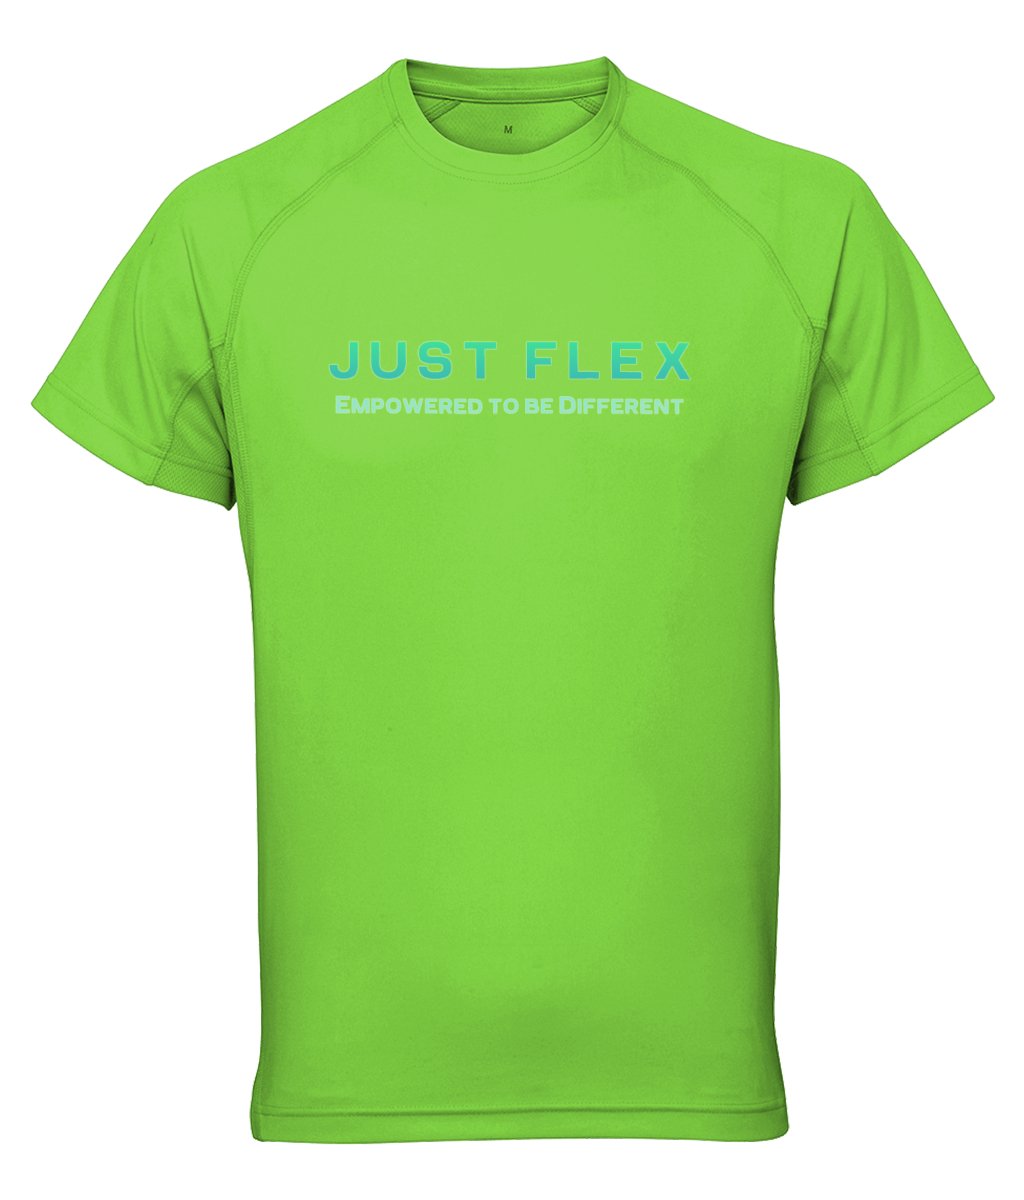 Just Flex - Empowered To Be Different Women's TriDri® Performance T - Shirt - Just Flex